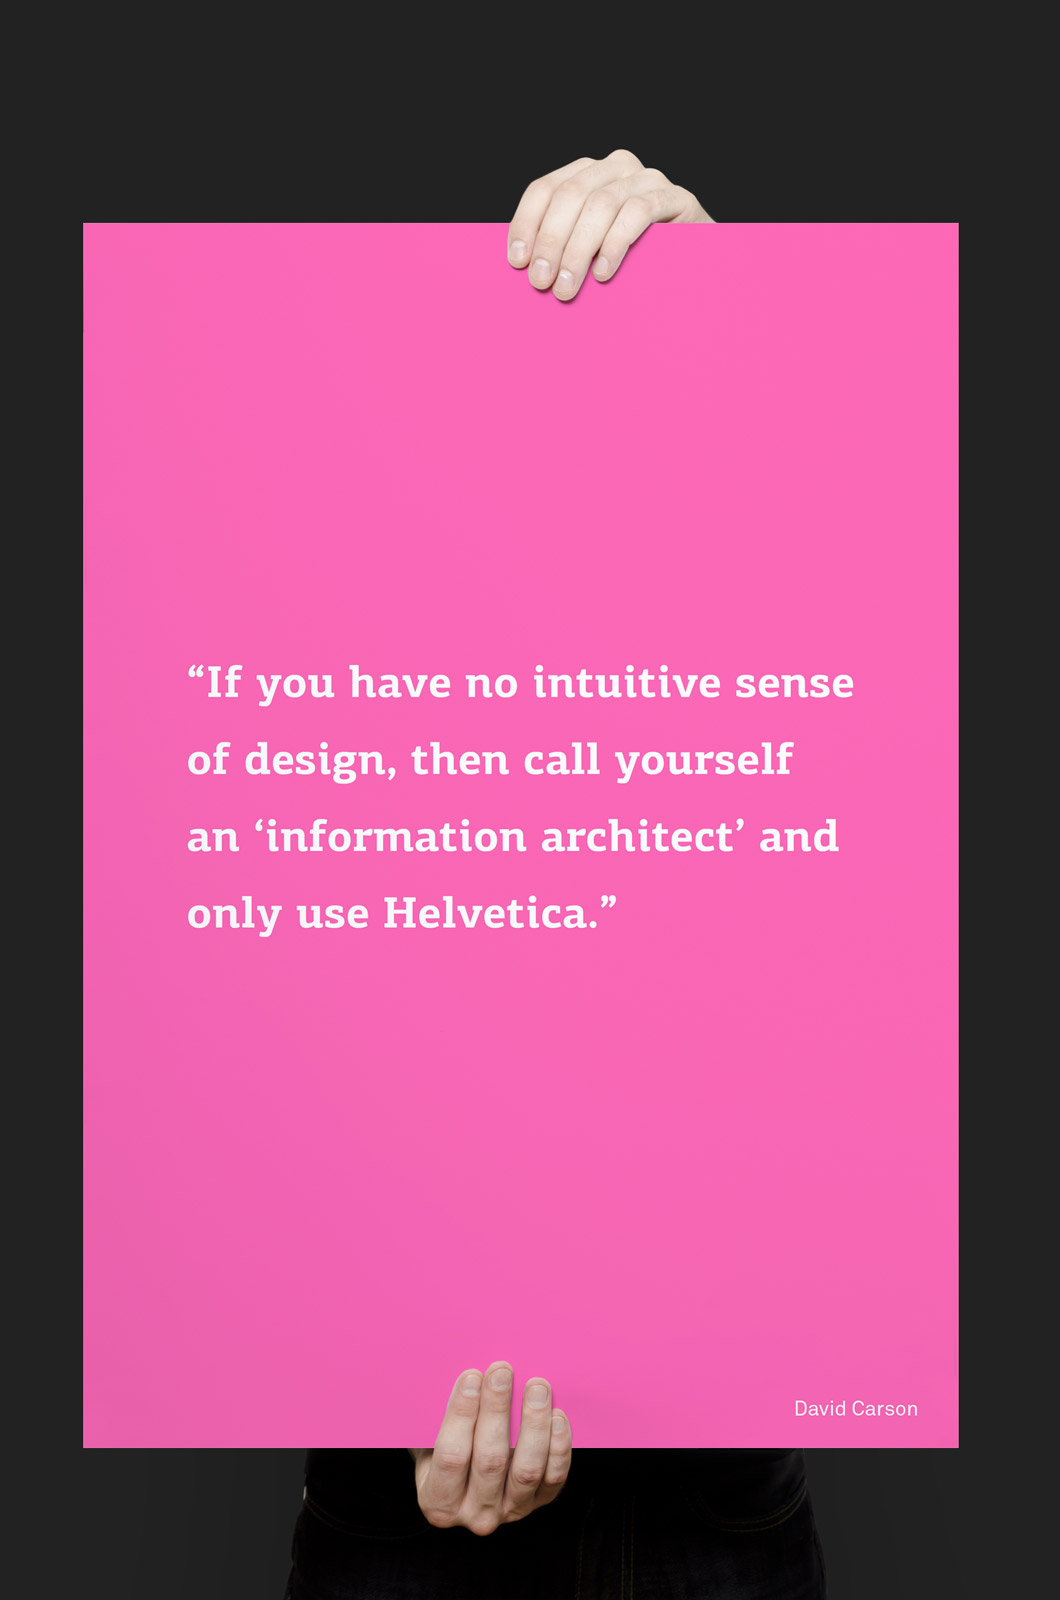 Alexander Glante - Works - Quotes on Design